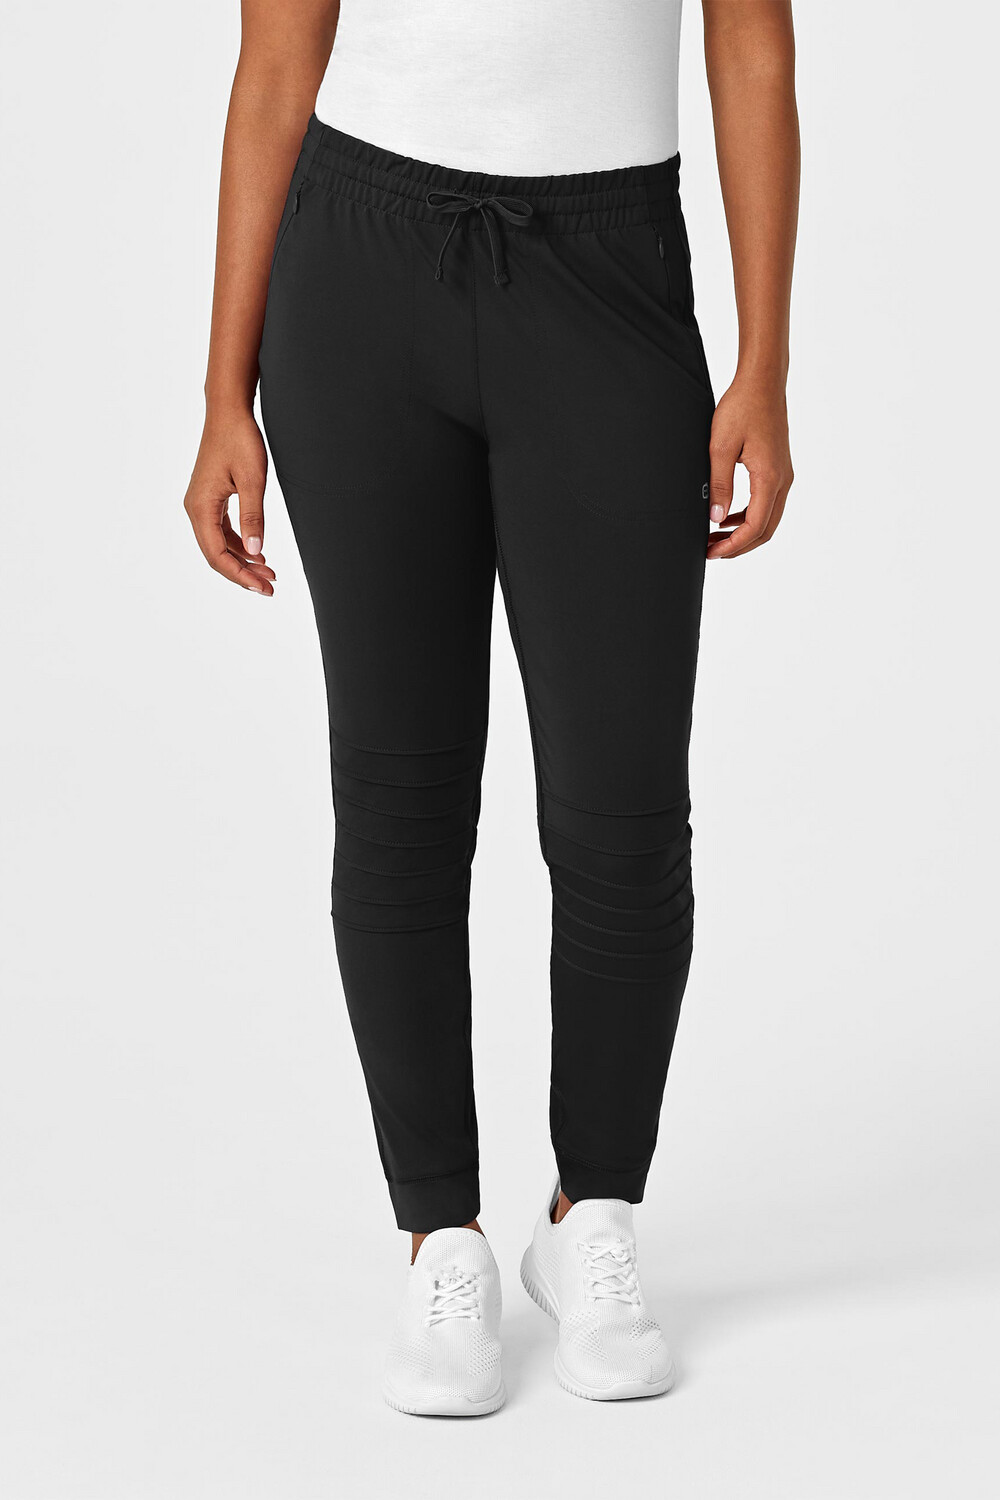 Pantalone donna 5199 jogger black